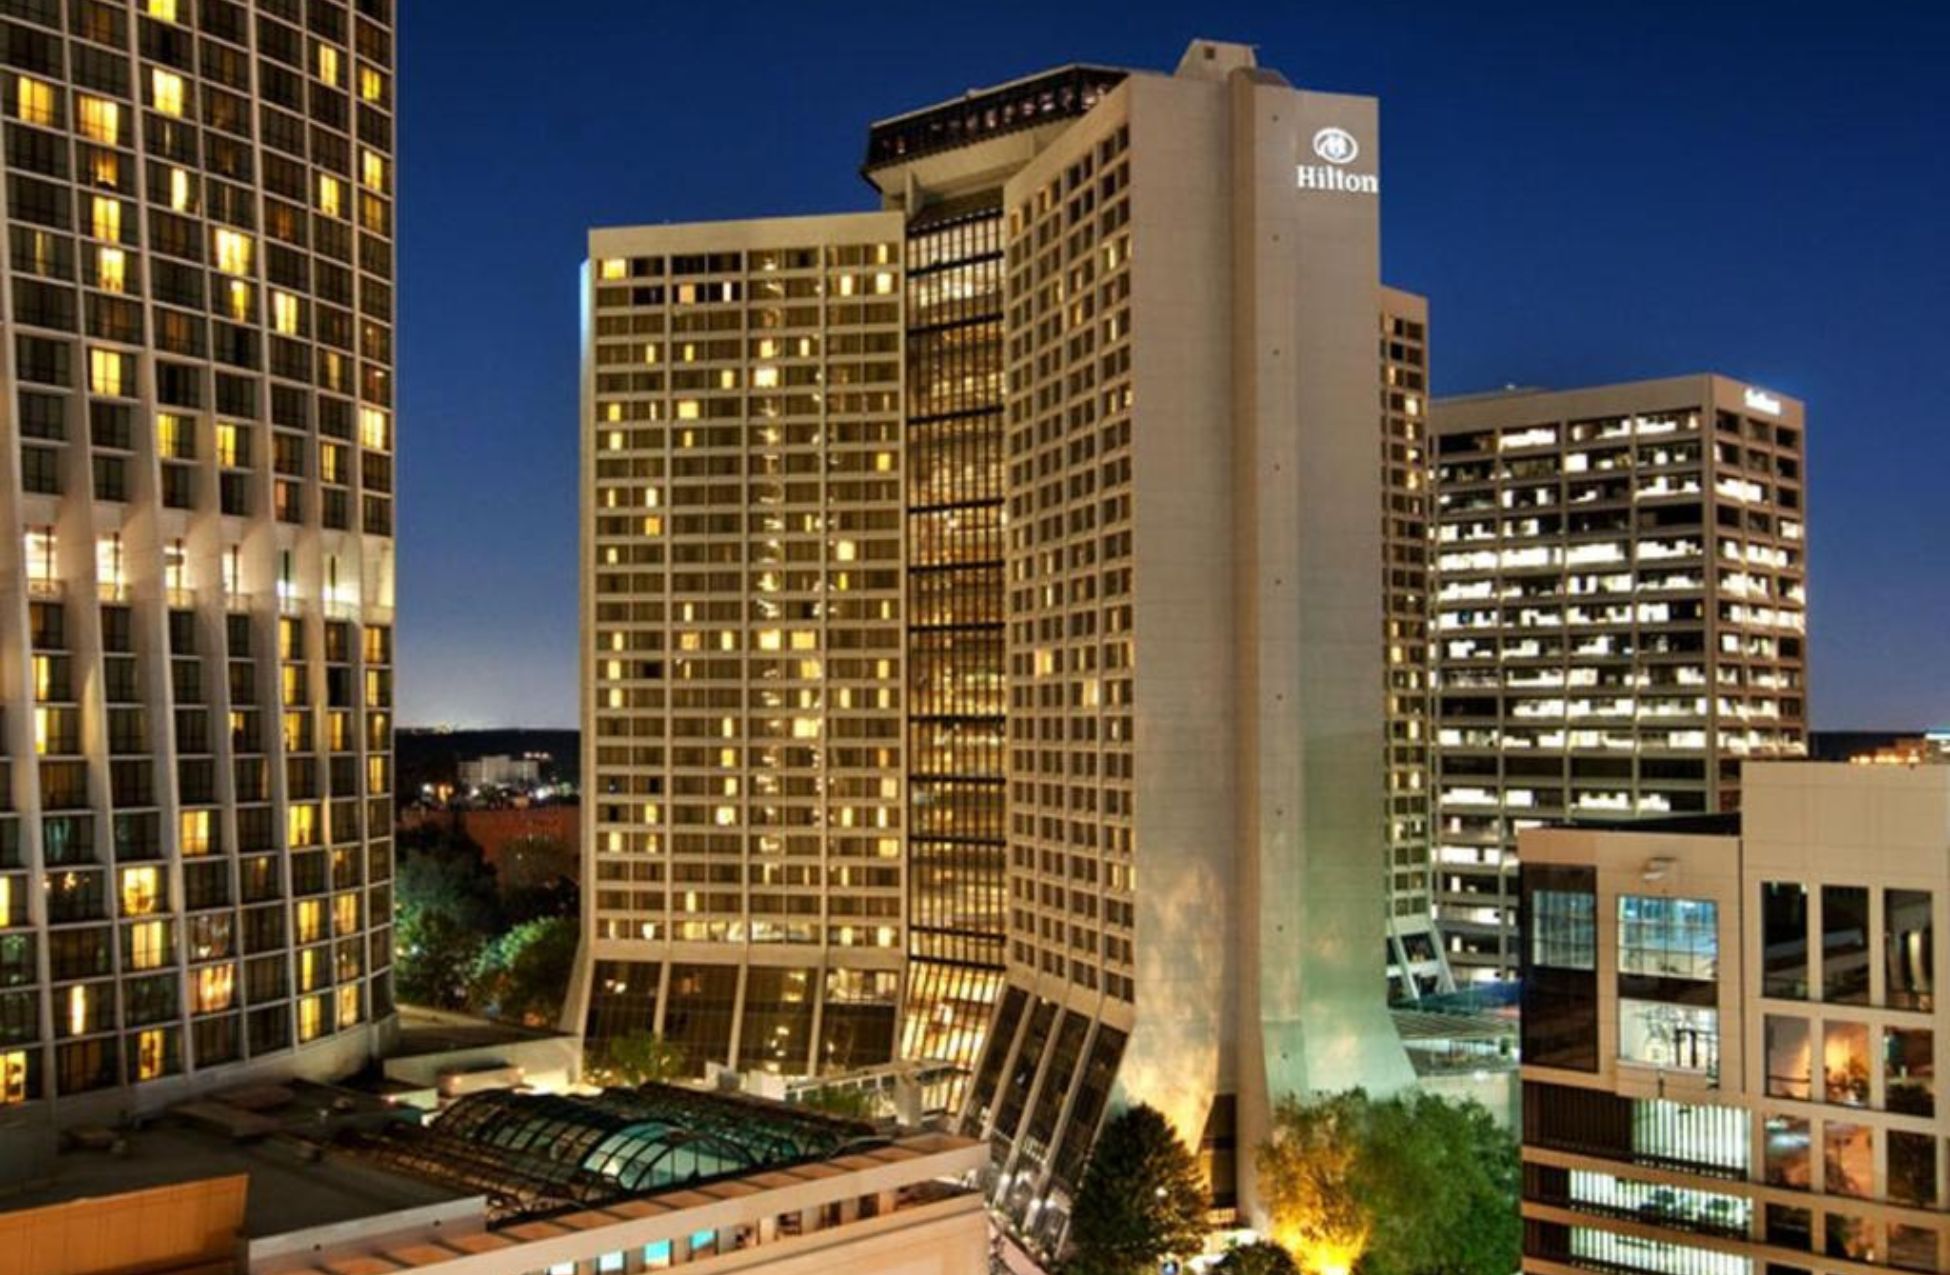 Hilton Atlanta - Best Hotels In Atlanta